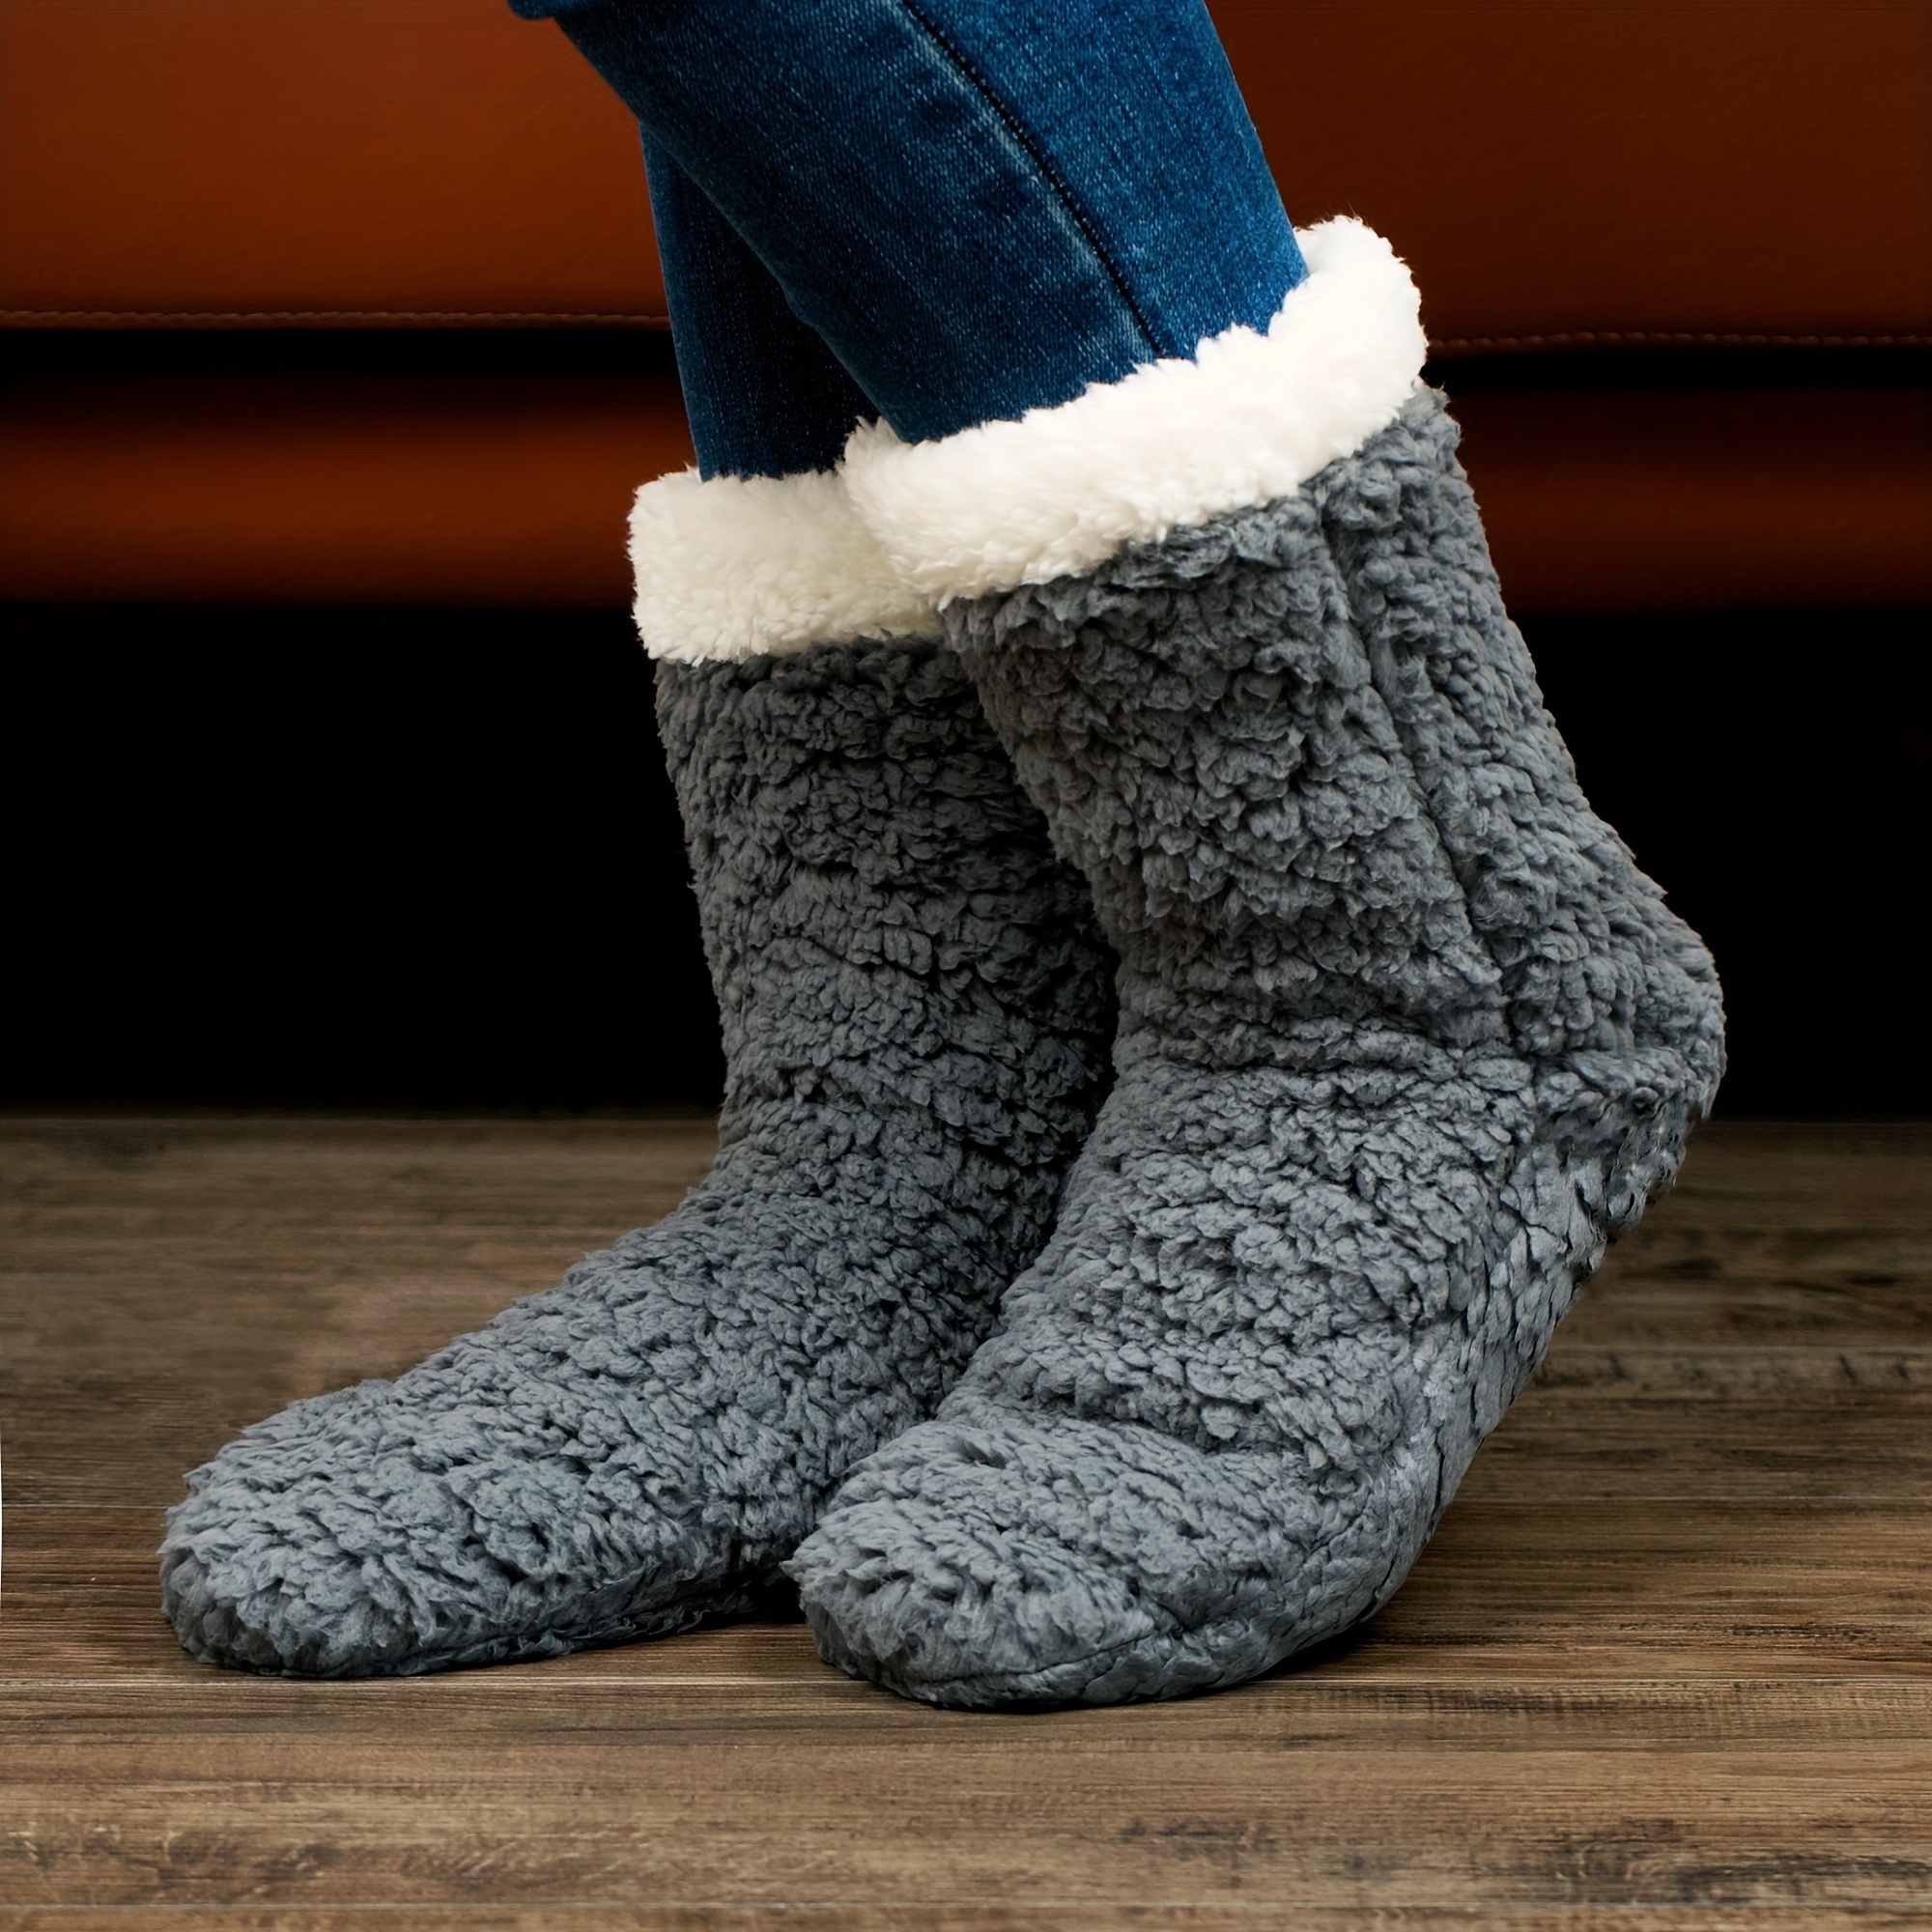 Christmas Women Kawaii Non Slip Socks - Fuzzy Fleece-Lined Warm Floor Socks